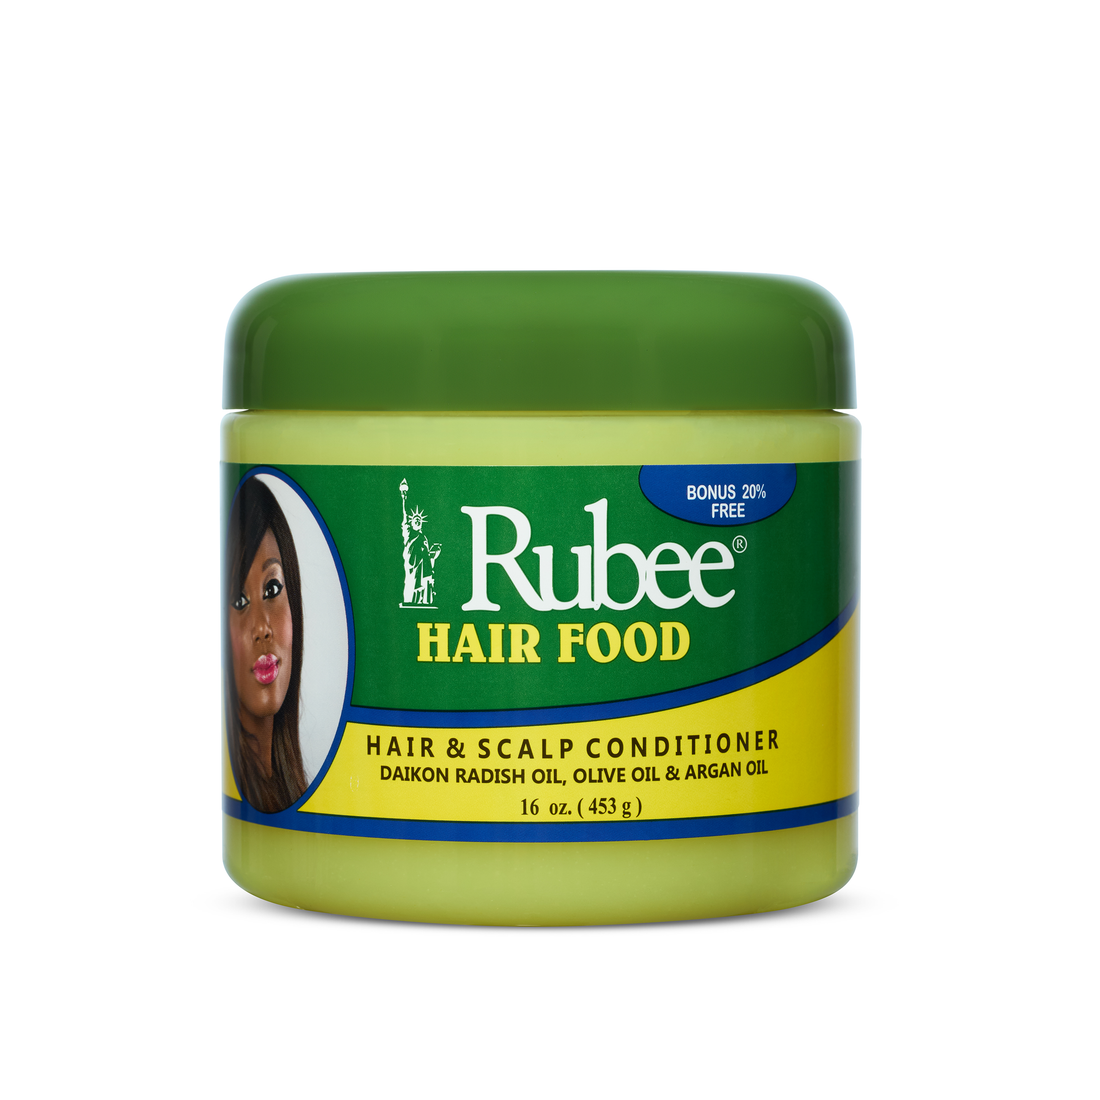 Rubee Hair Food